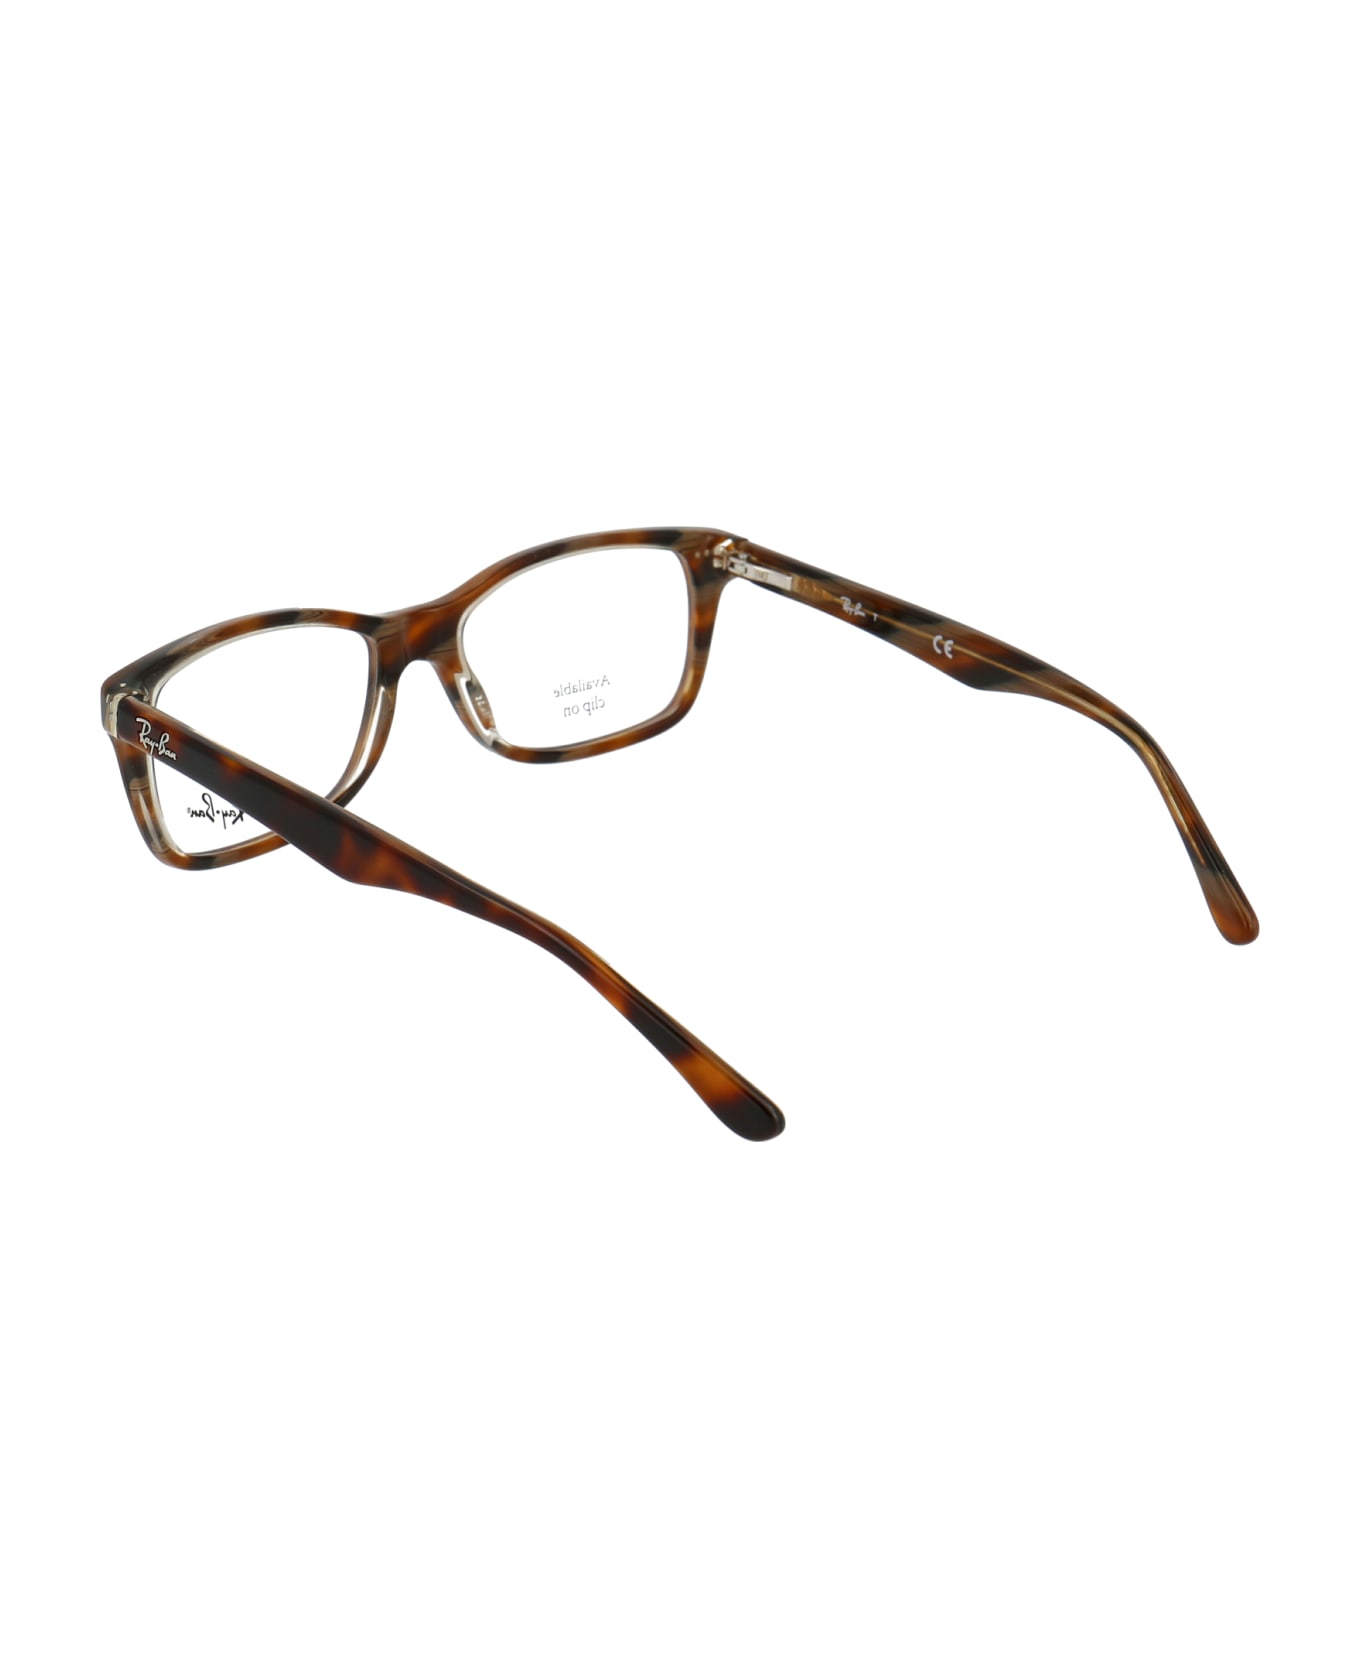 Ray-Ban 0rx5228 Glasses - 5913 HAVANA/BROWN/YELLOW